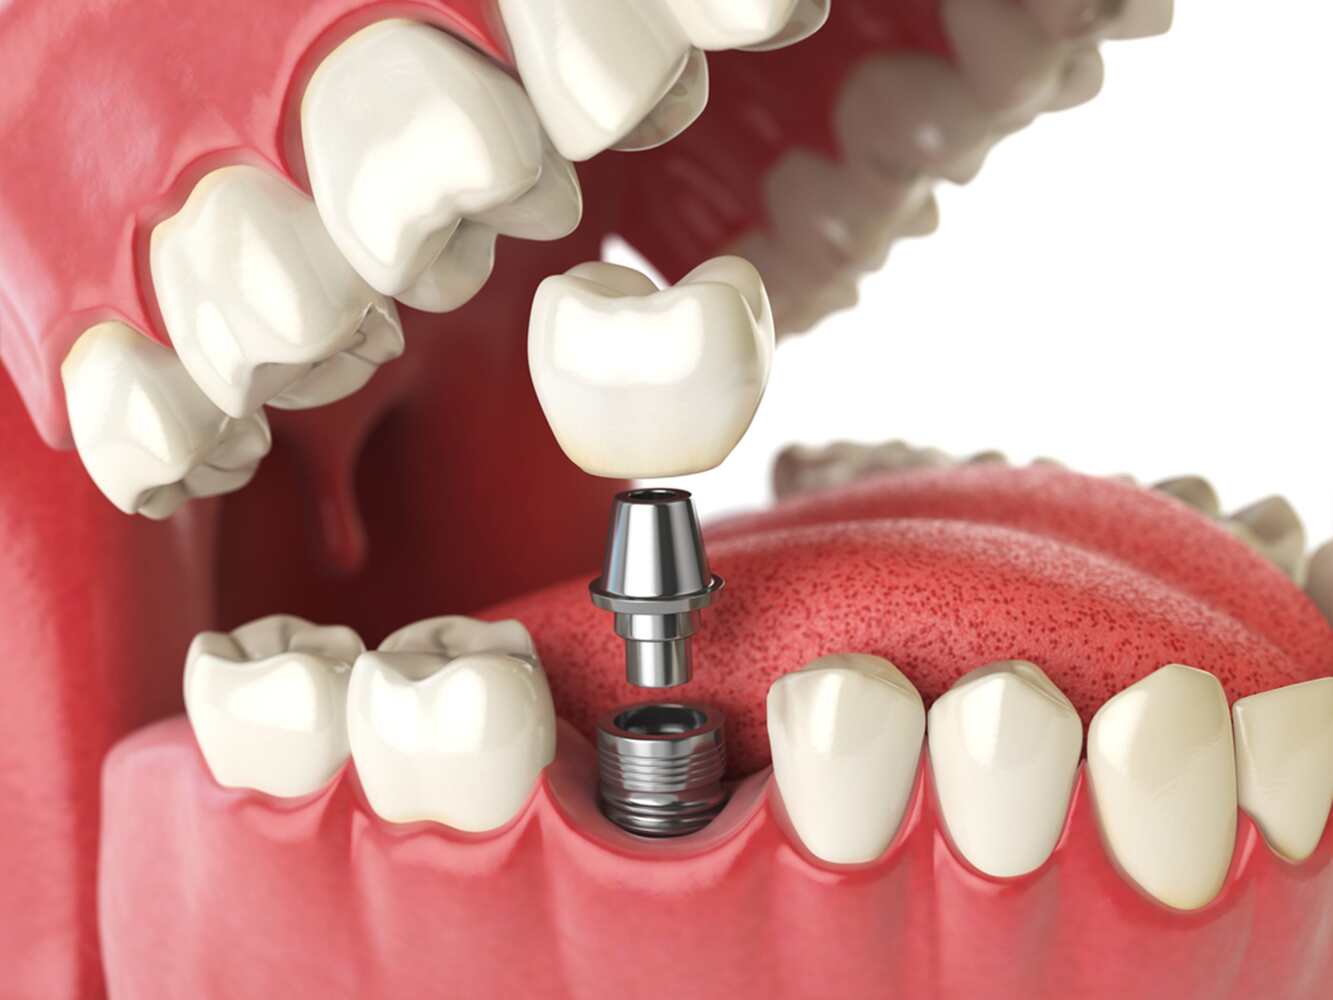 importance of dental implants in modern dentistry